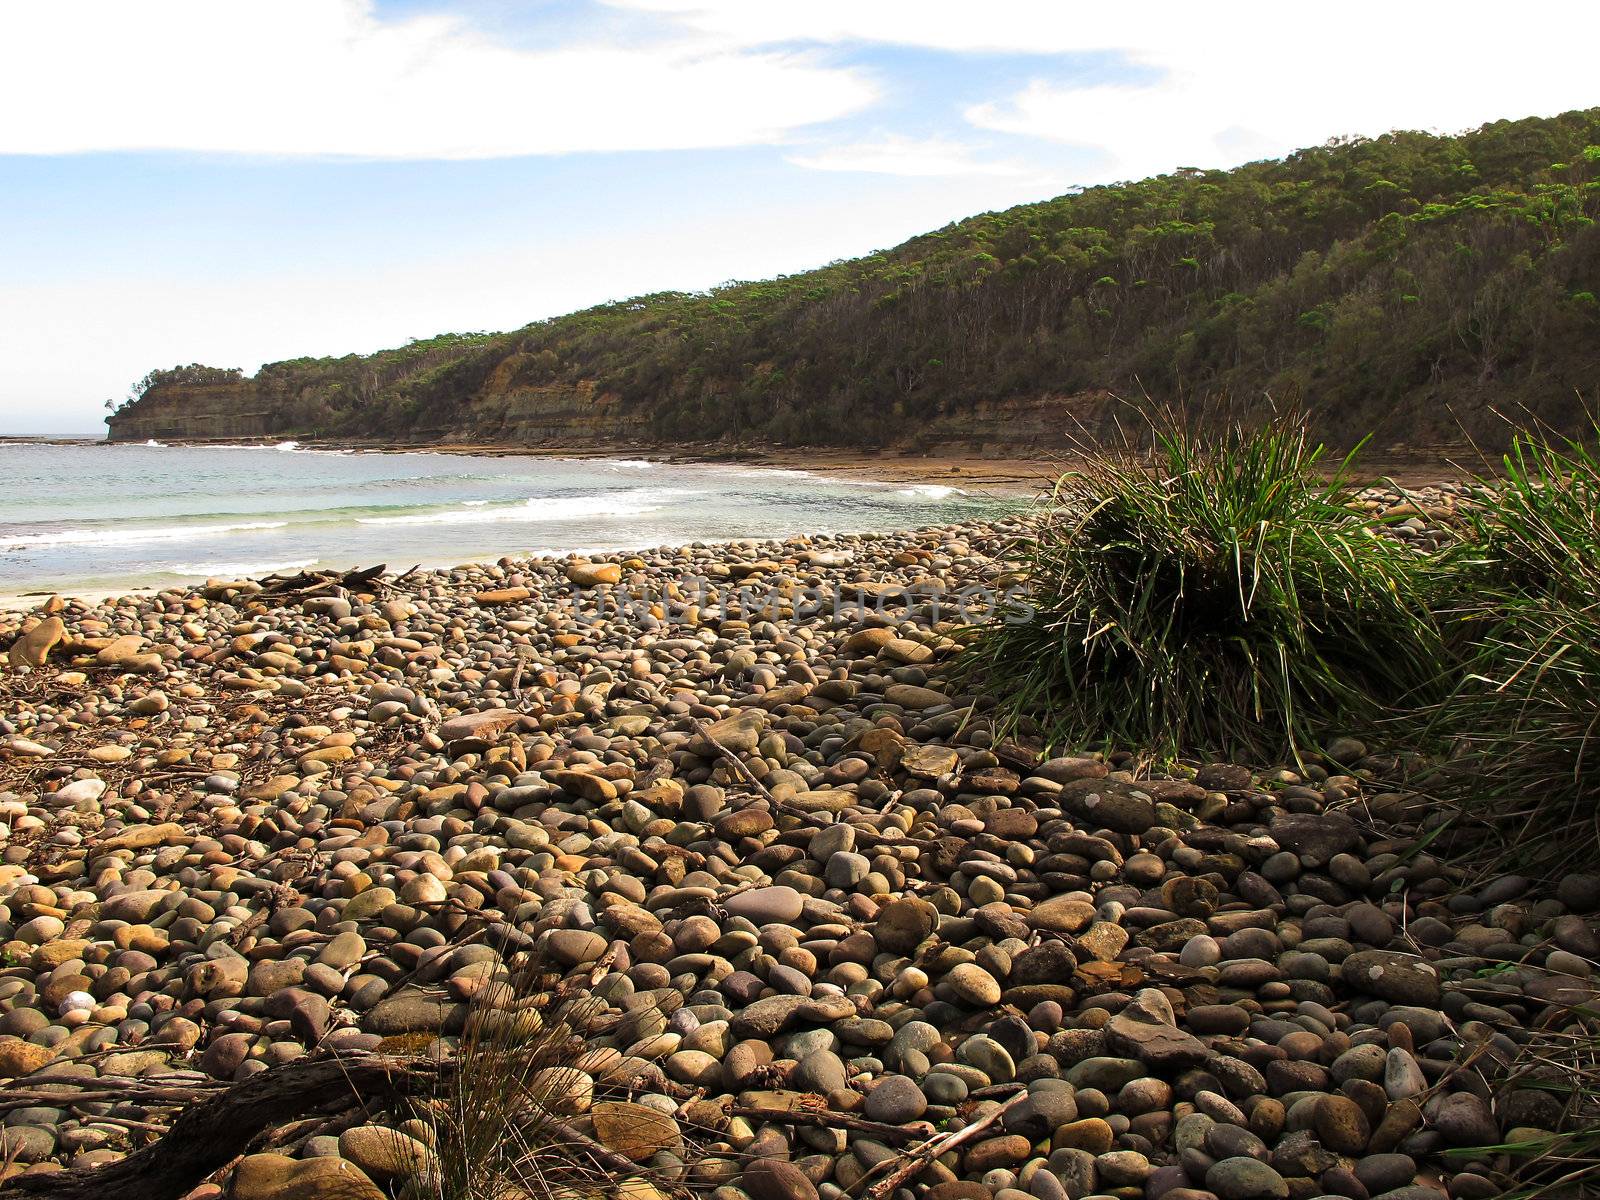 Wild shore in australia with stony beach, plants and trees